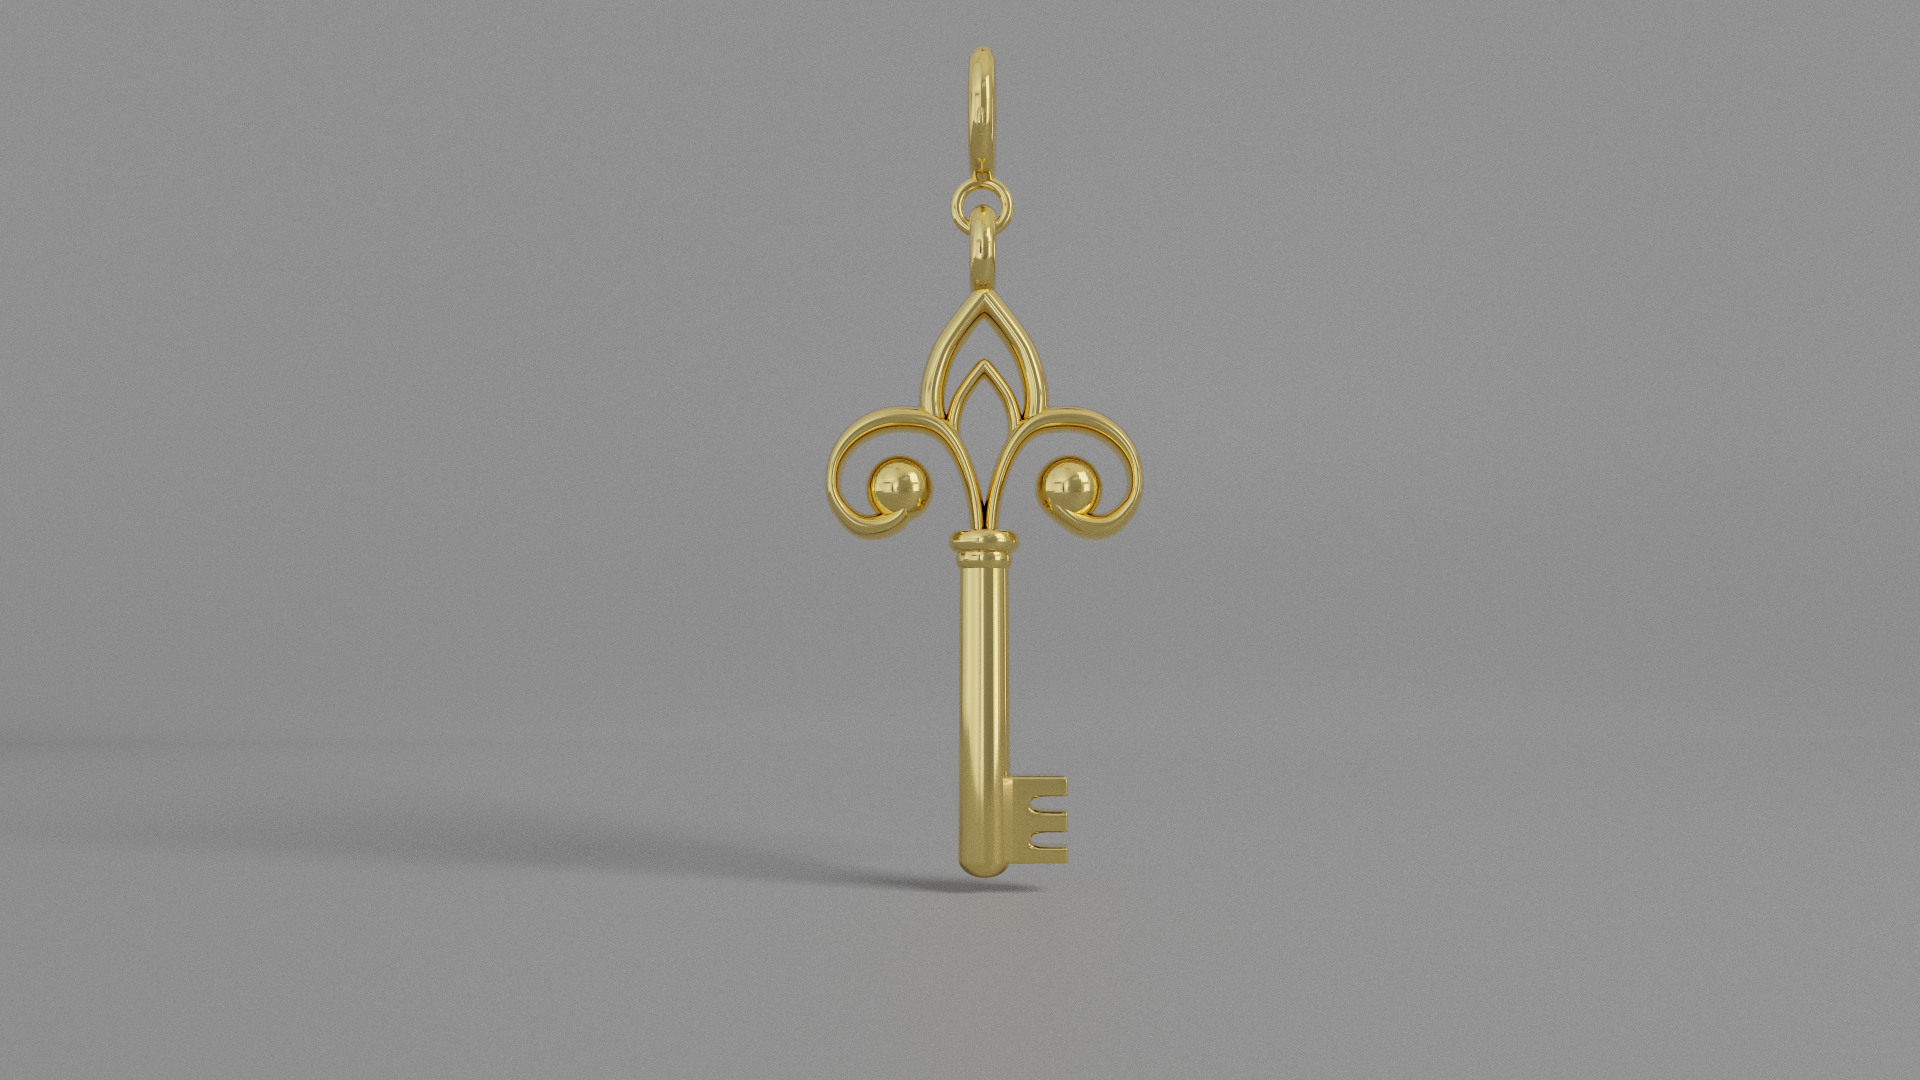 Gold key charm